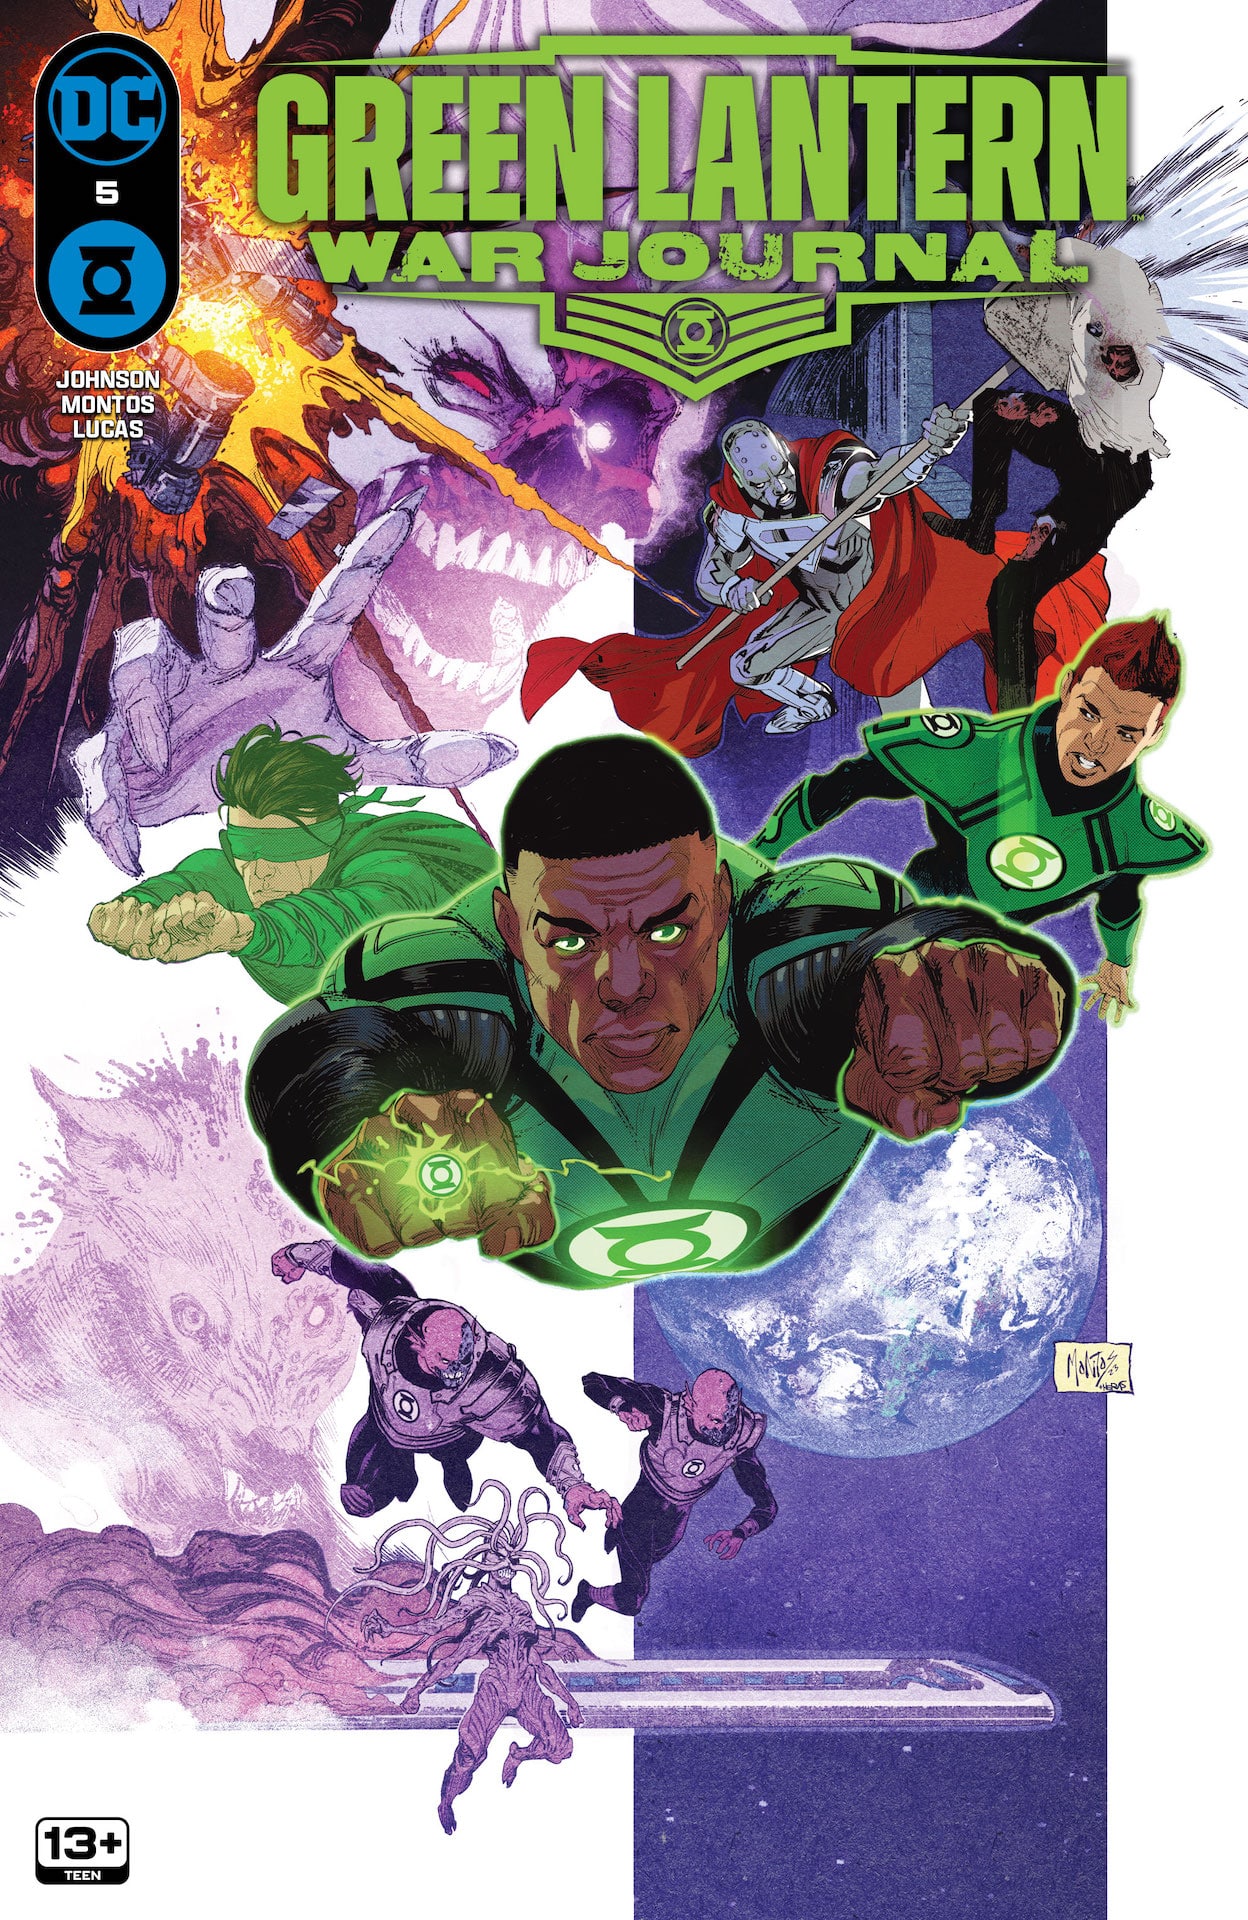 DC Preview: Green Lantern: War Journal #5